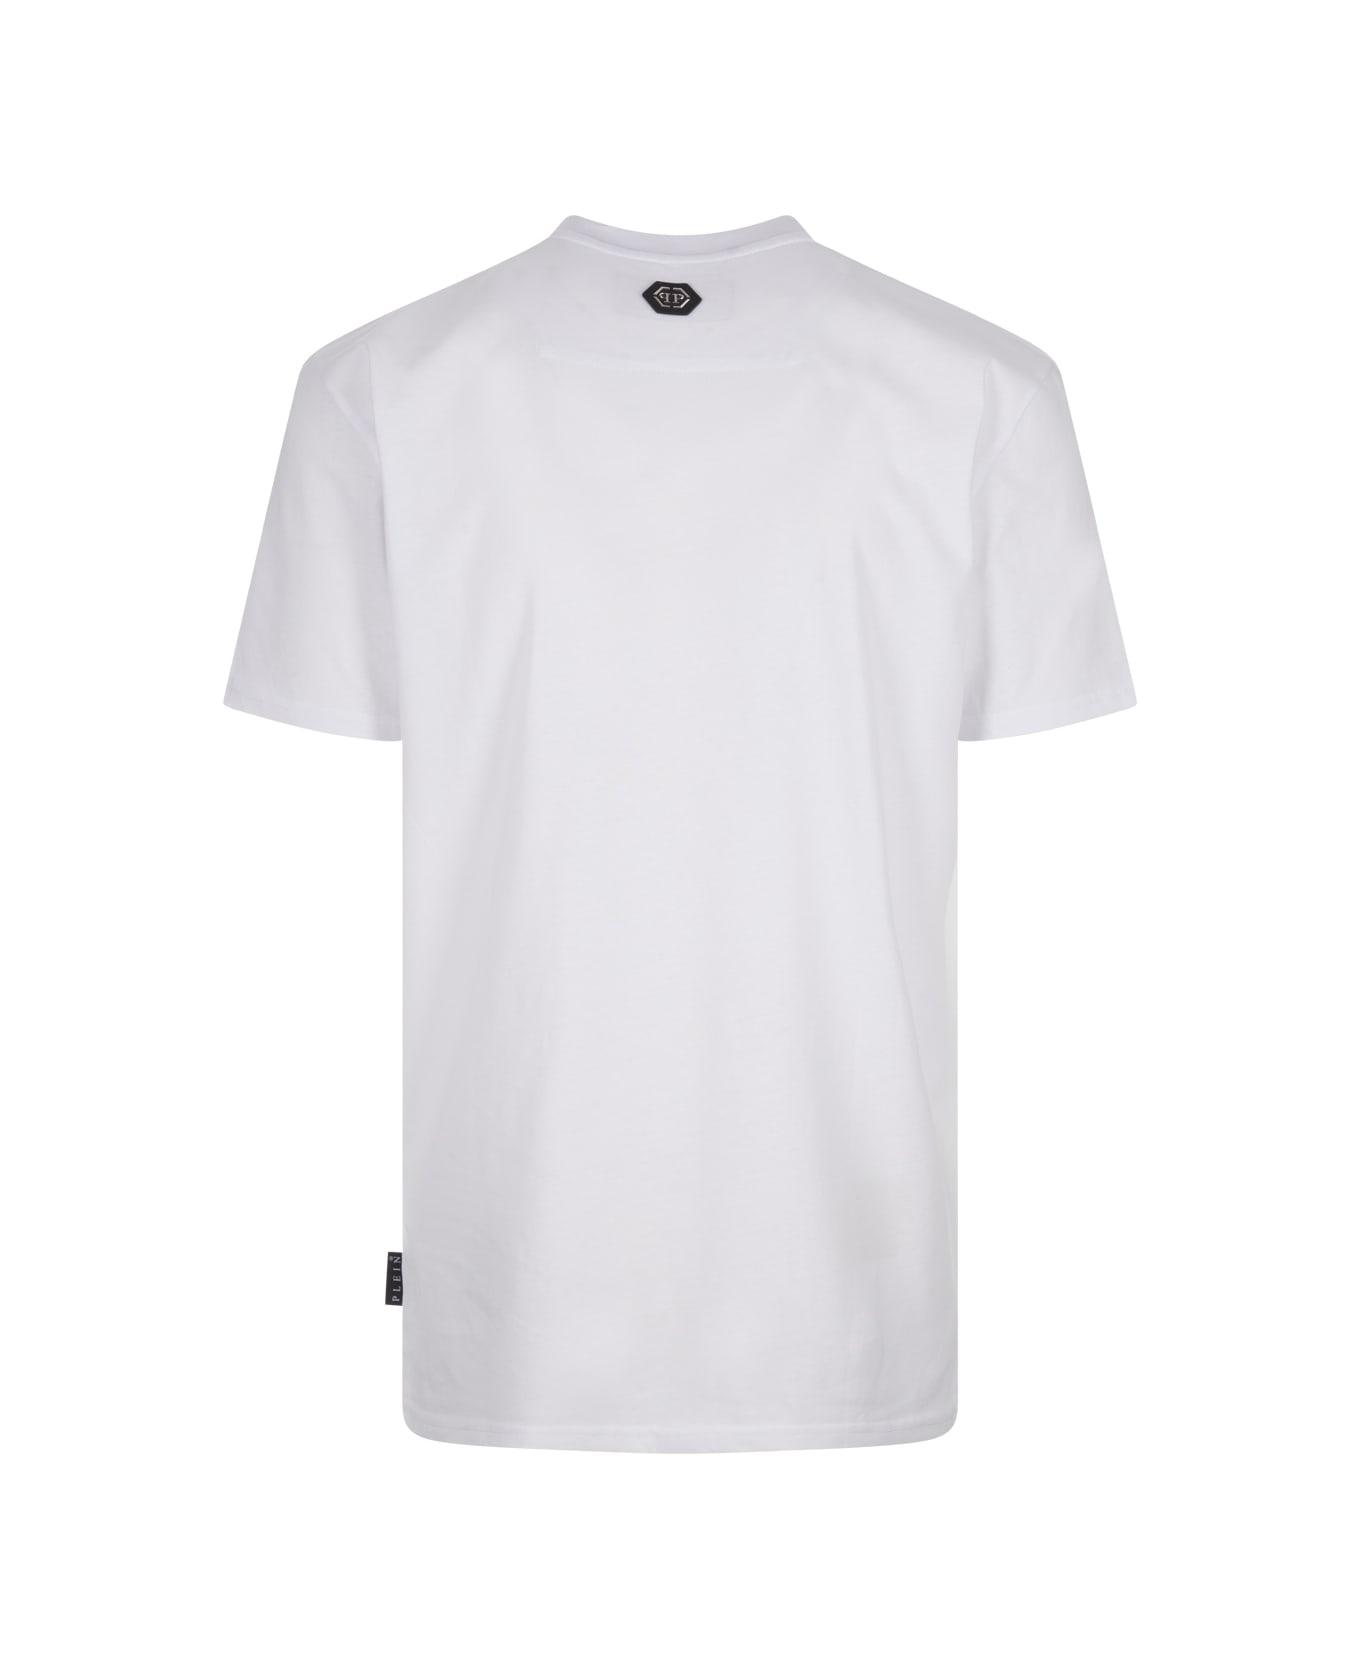 Philipp Plein White T-shirt With Philipp Plein Tm Print - Black シャツ